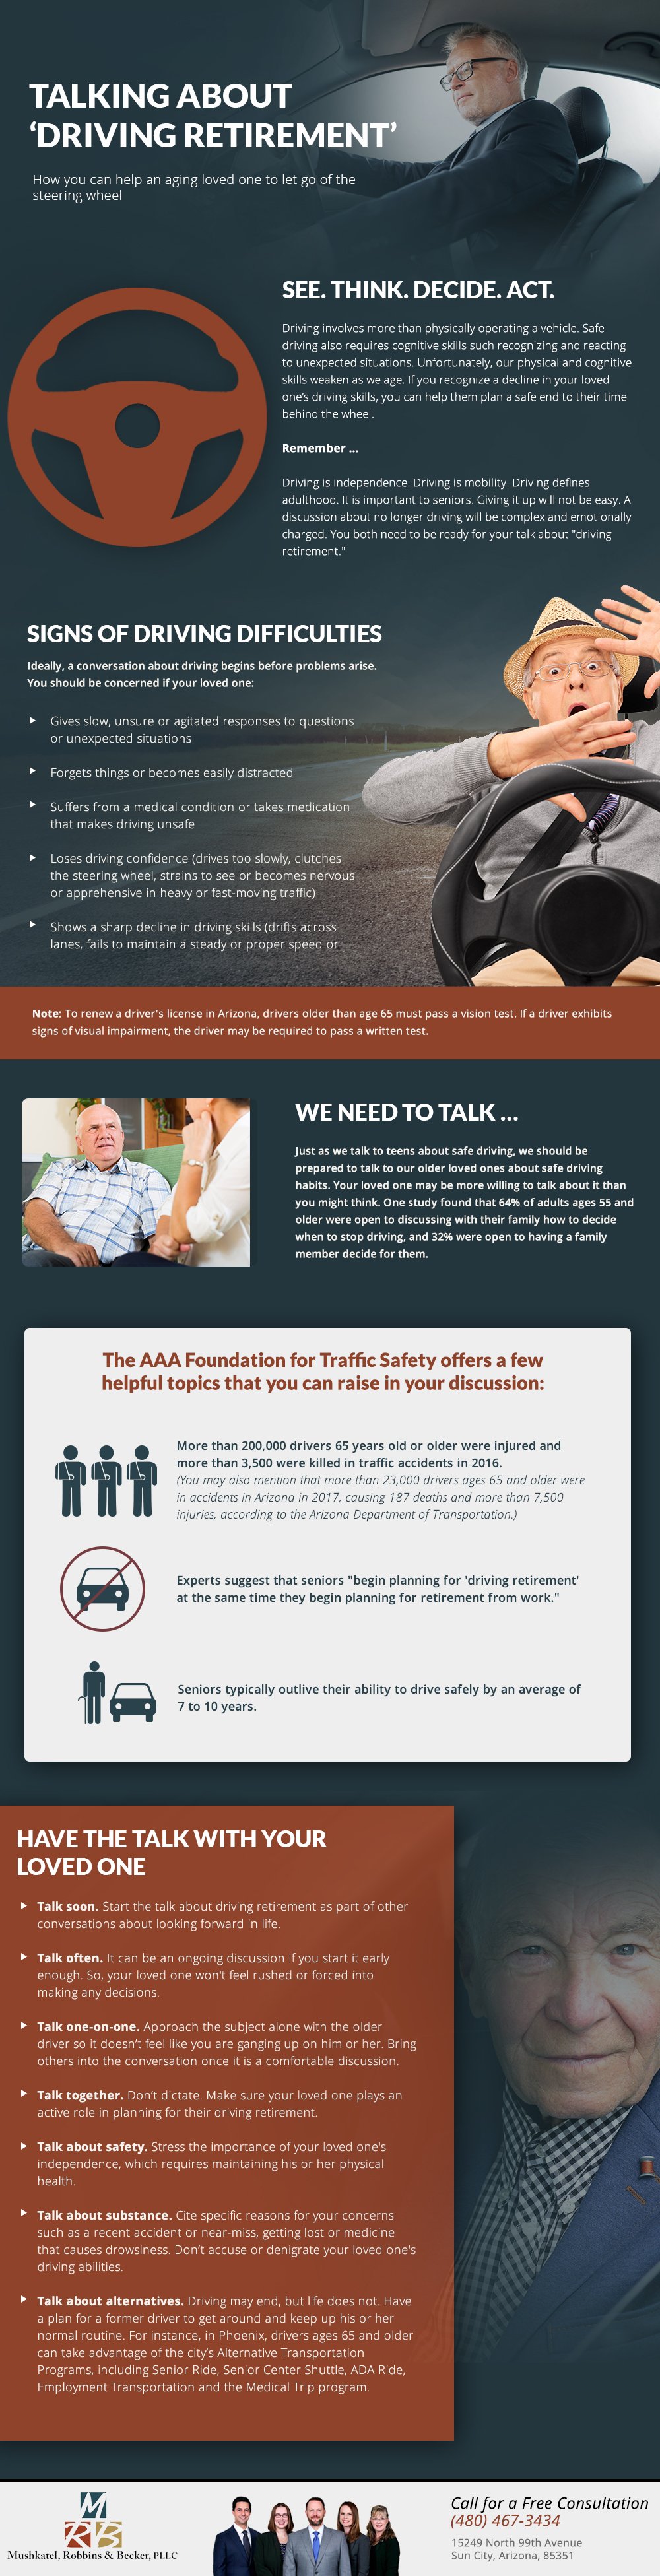 driving-retirement-infographic-plaza